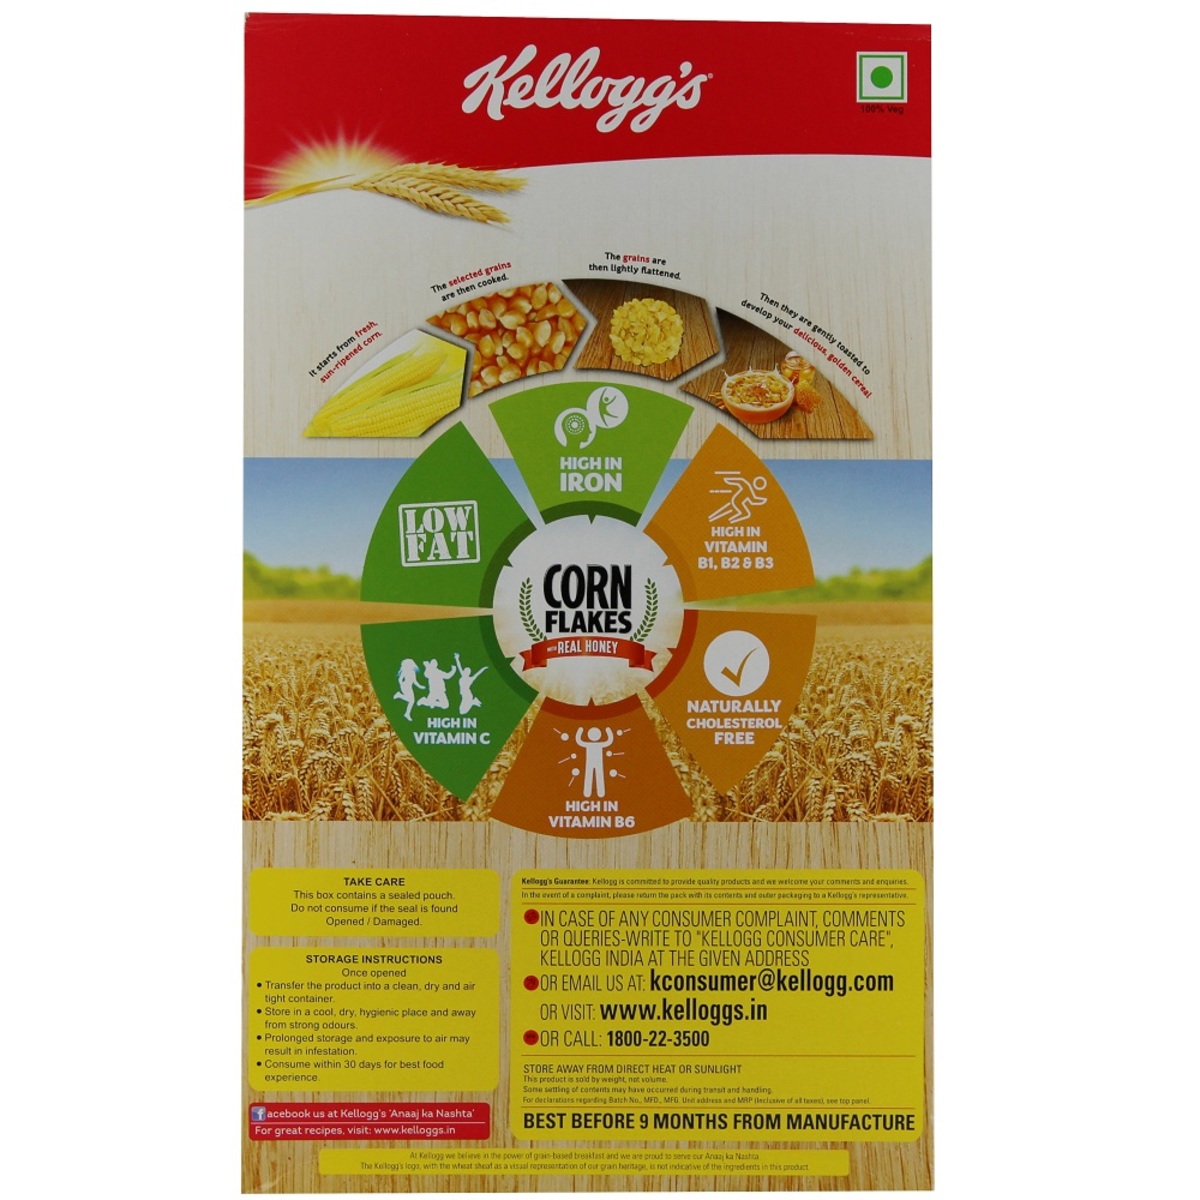 Kellogg's Corn Flakes Real Honey 630g